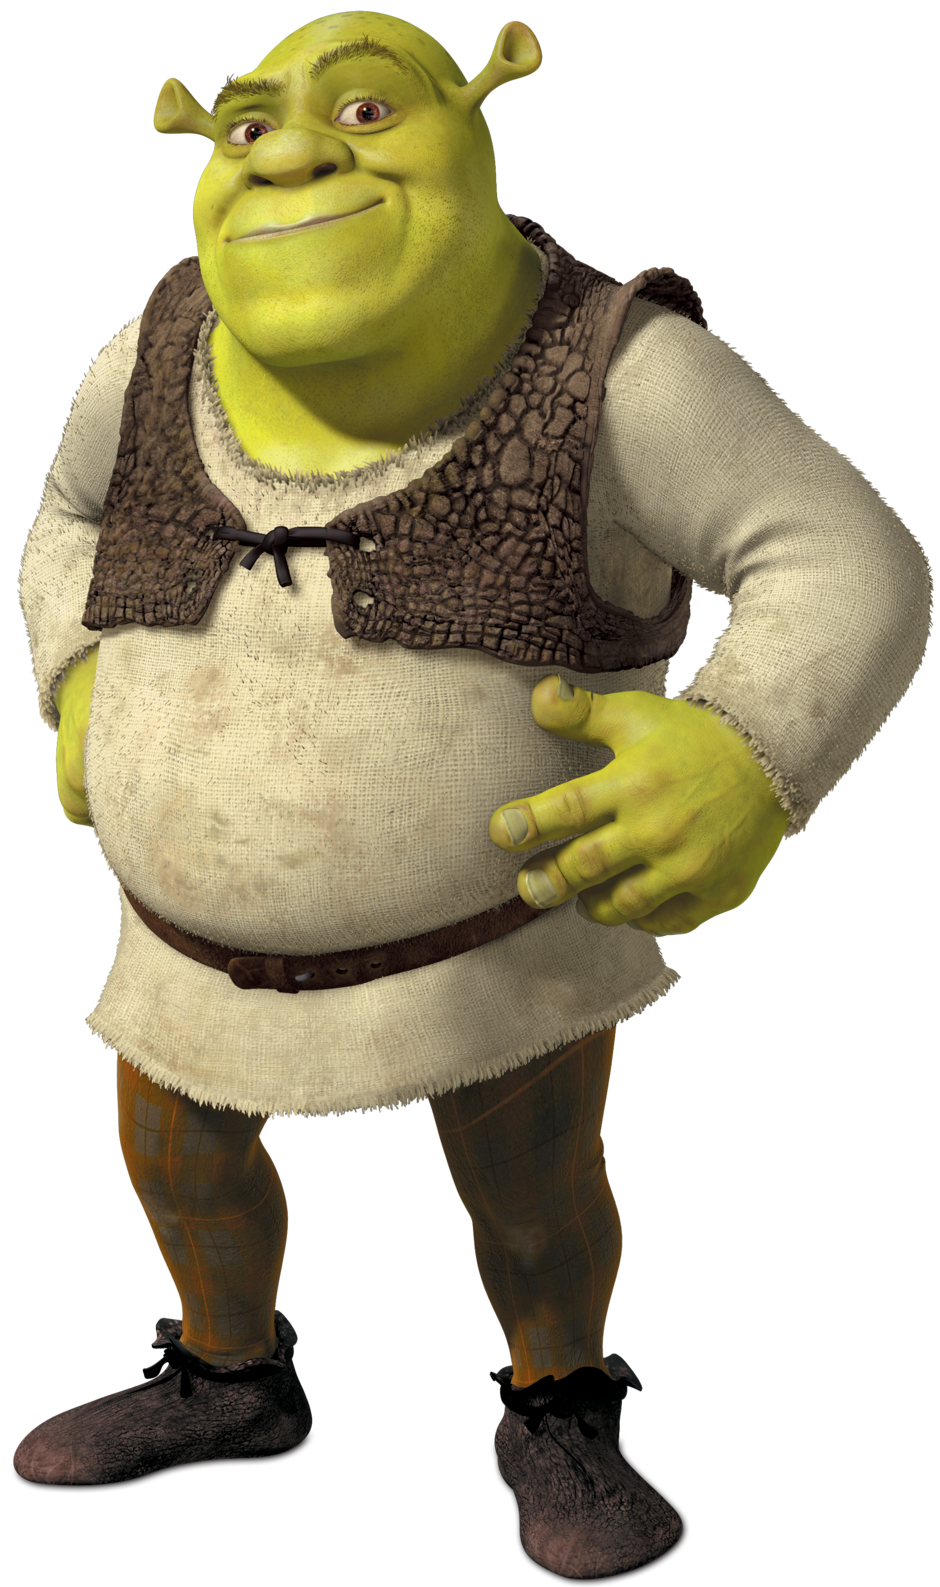 Shrek PNG transparent image download, size: 1116x1600px